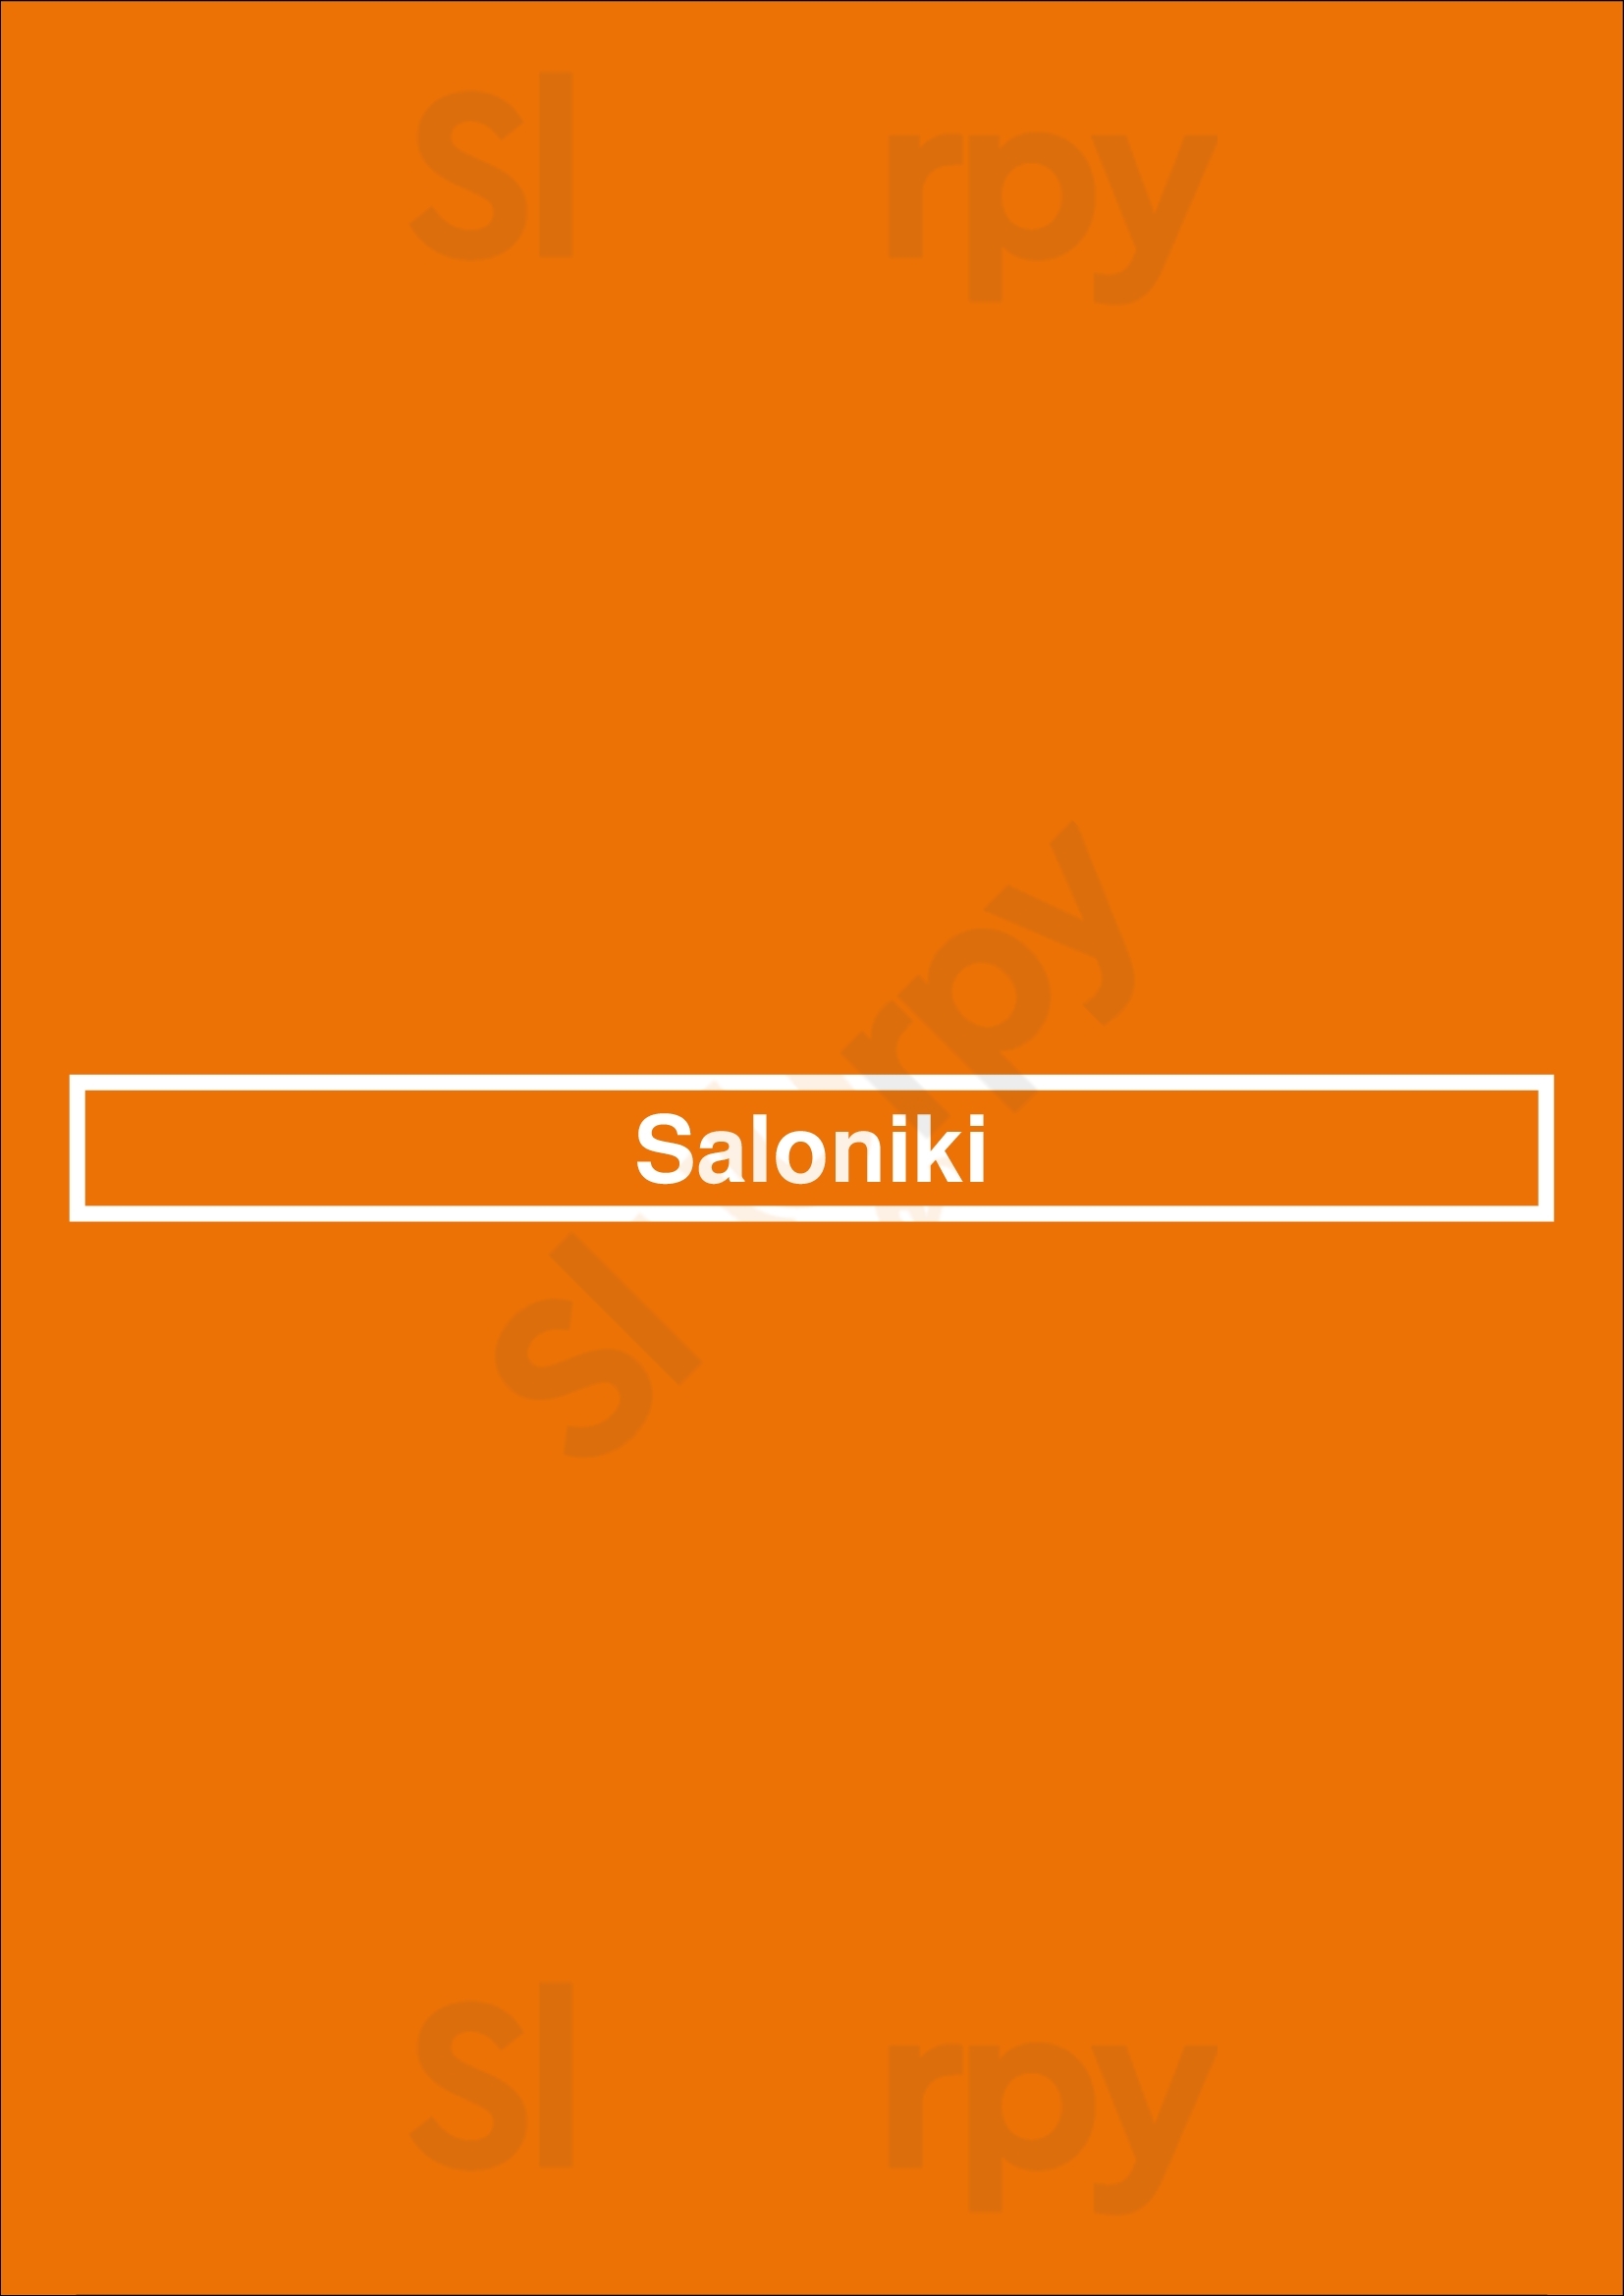 Saloniki Goes Menu - 1